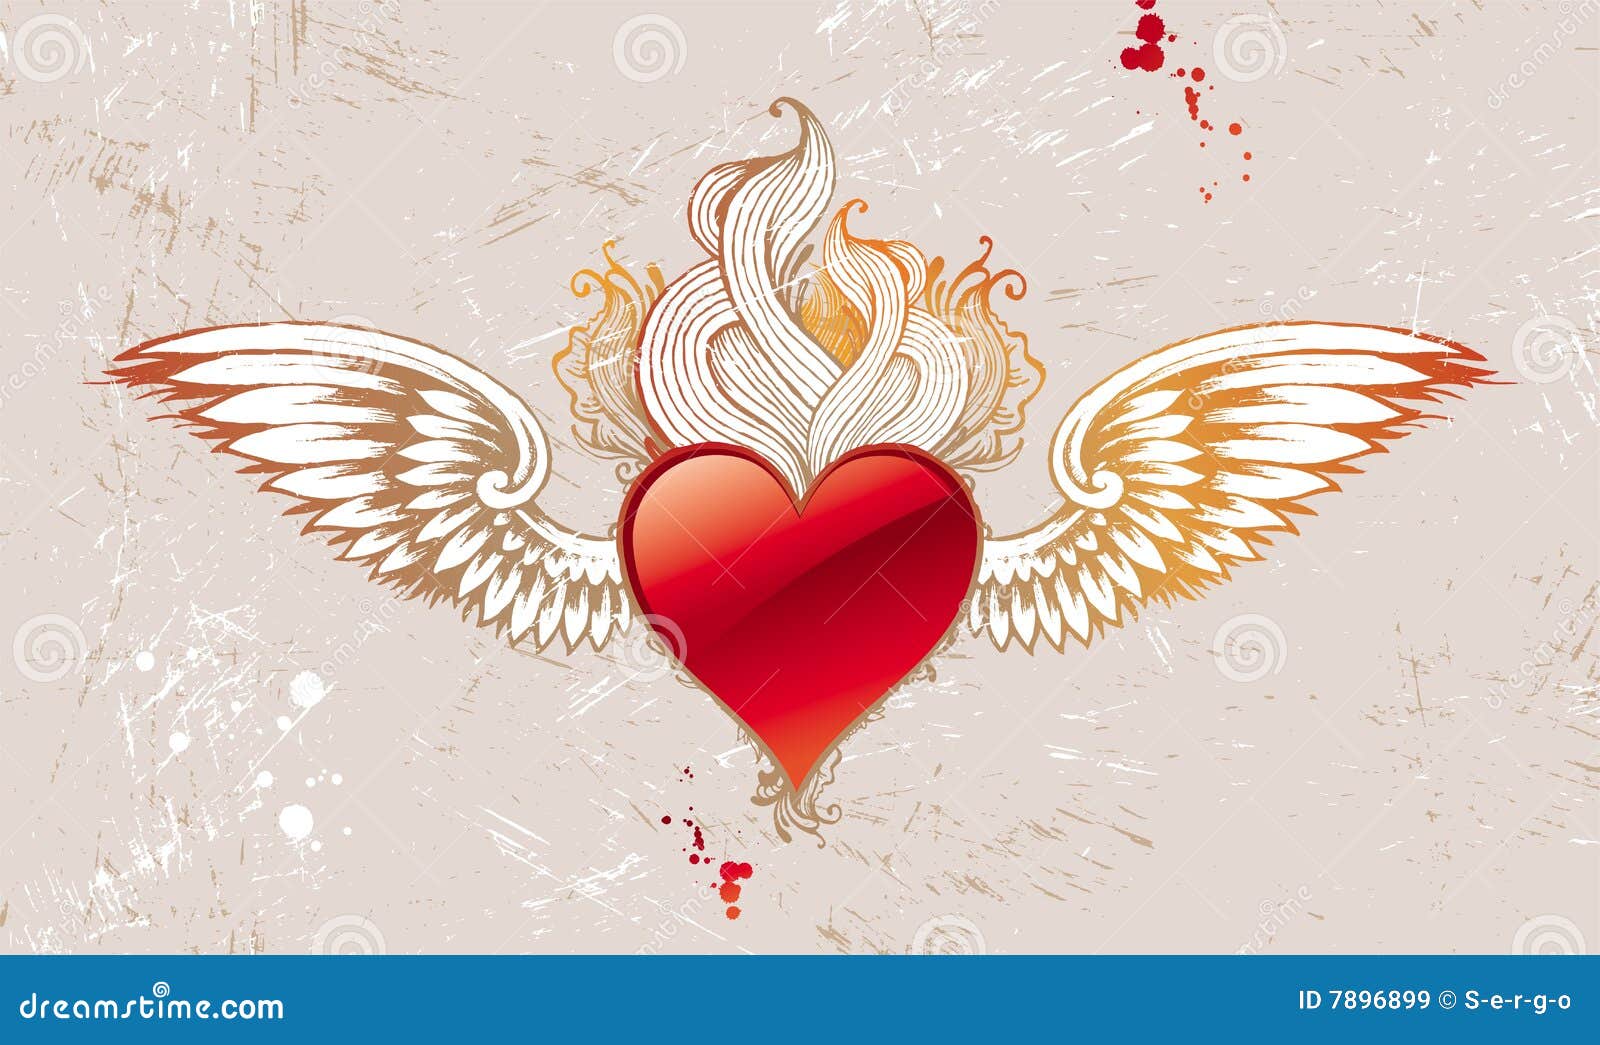 vintage winged heart